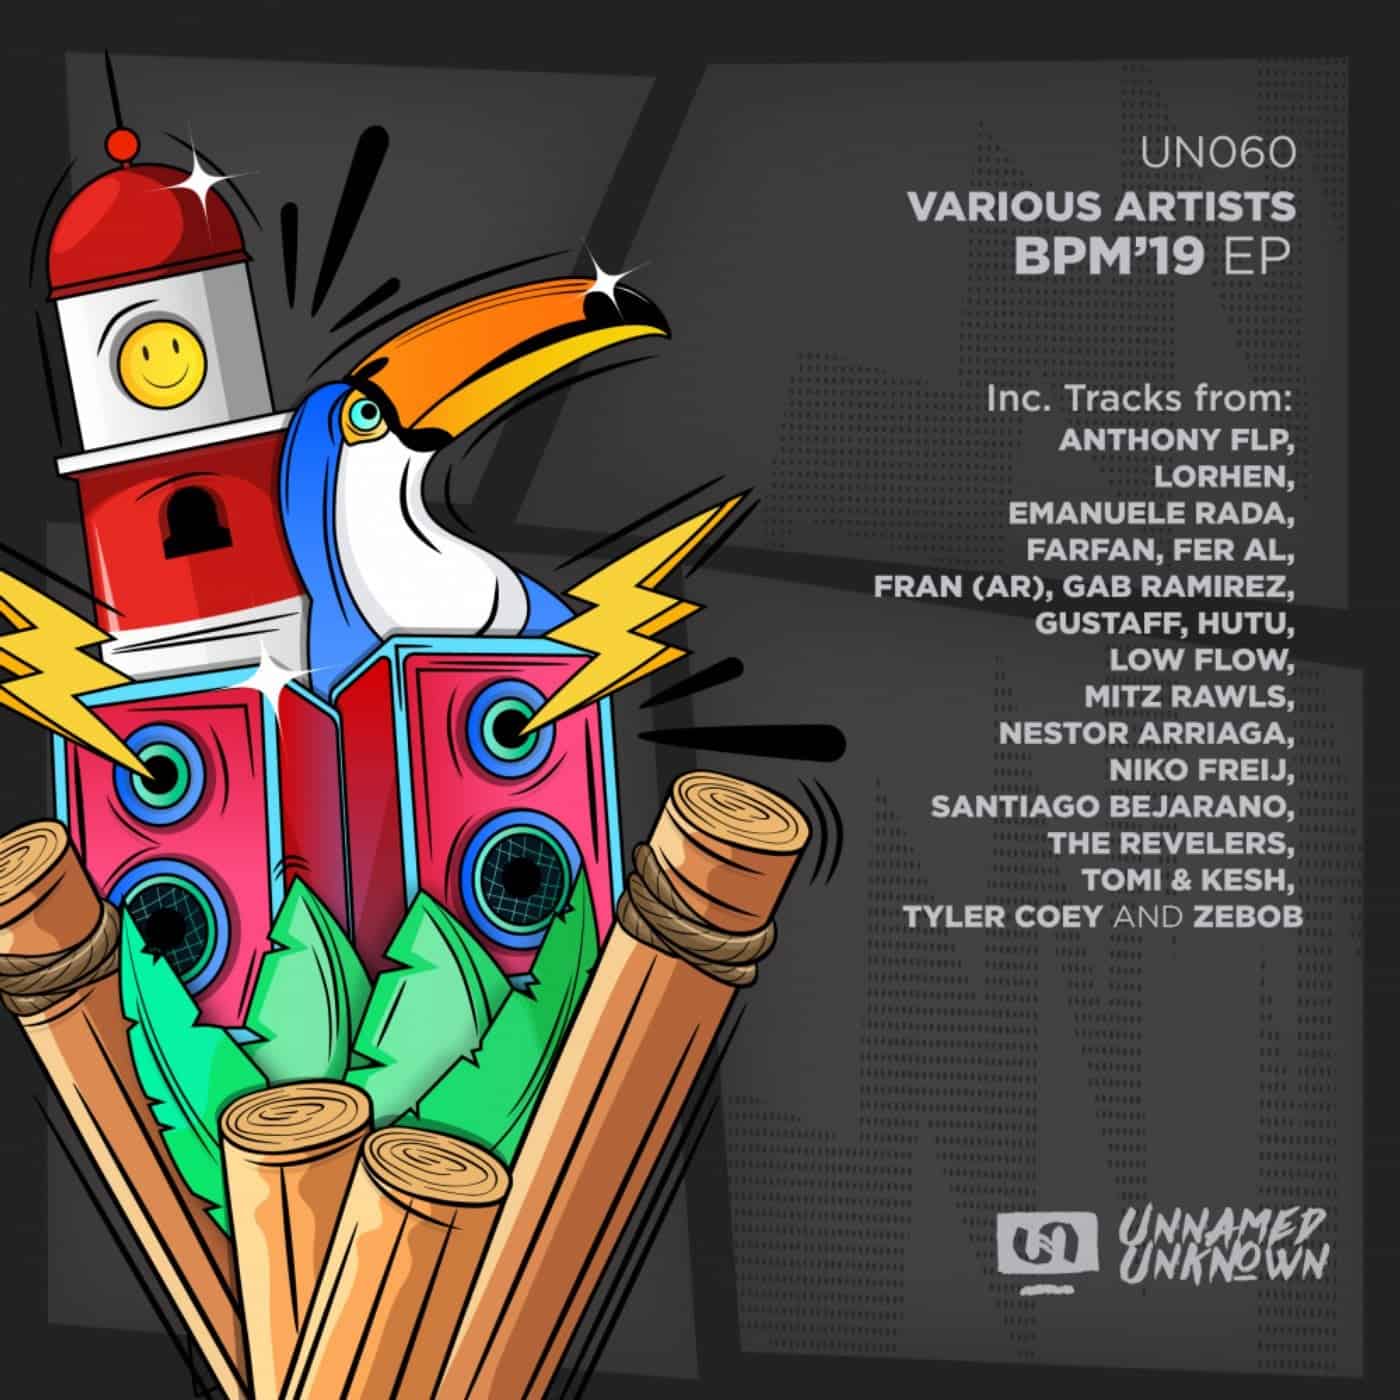 image cover: VA - Various Artists BPM '19 / UN060